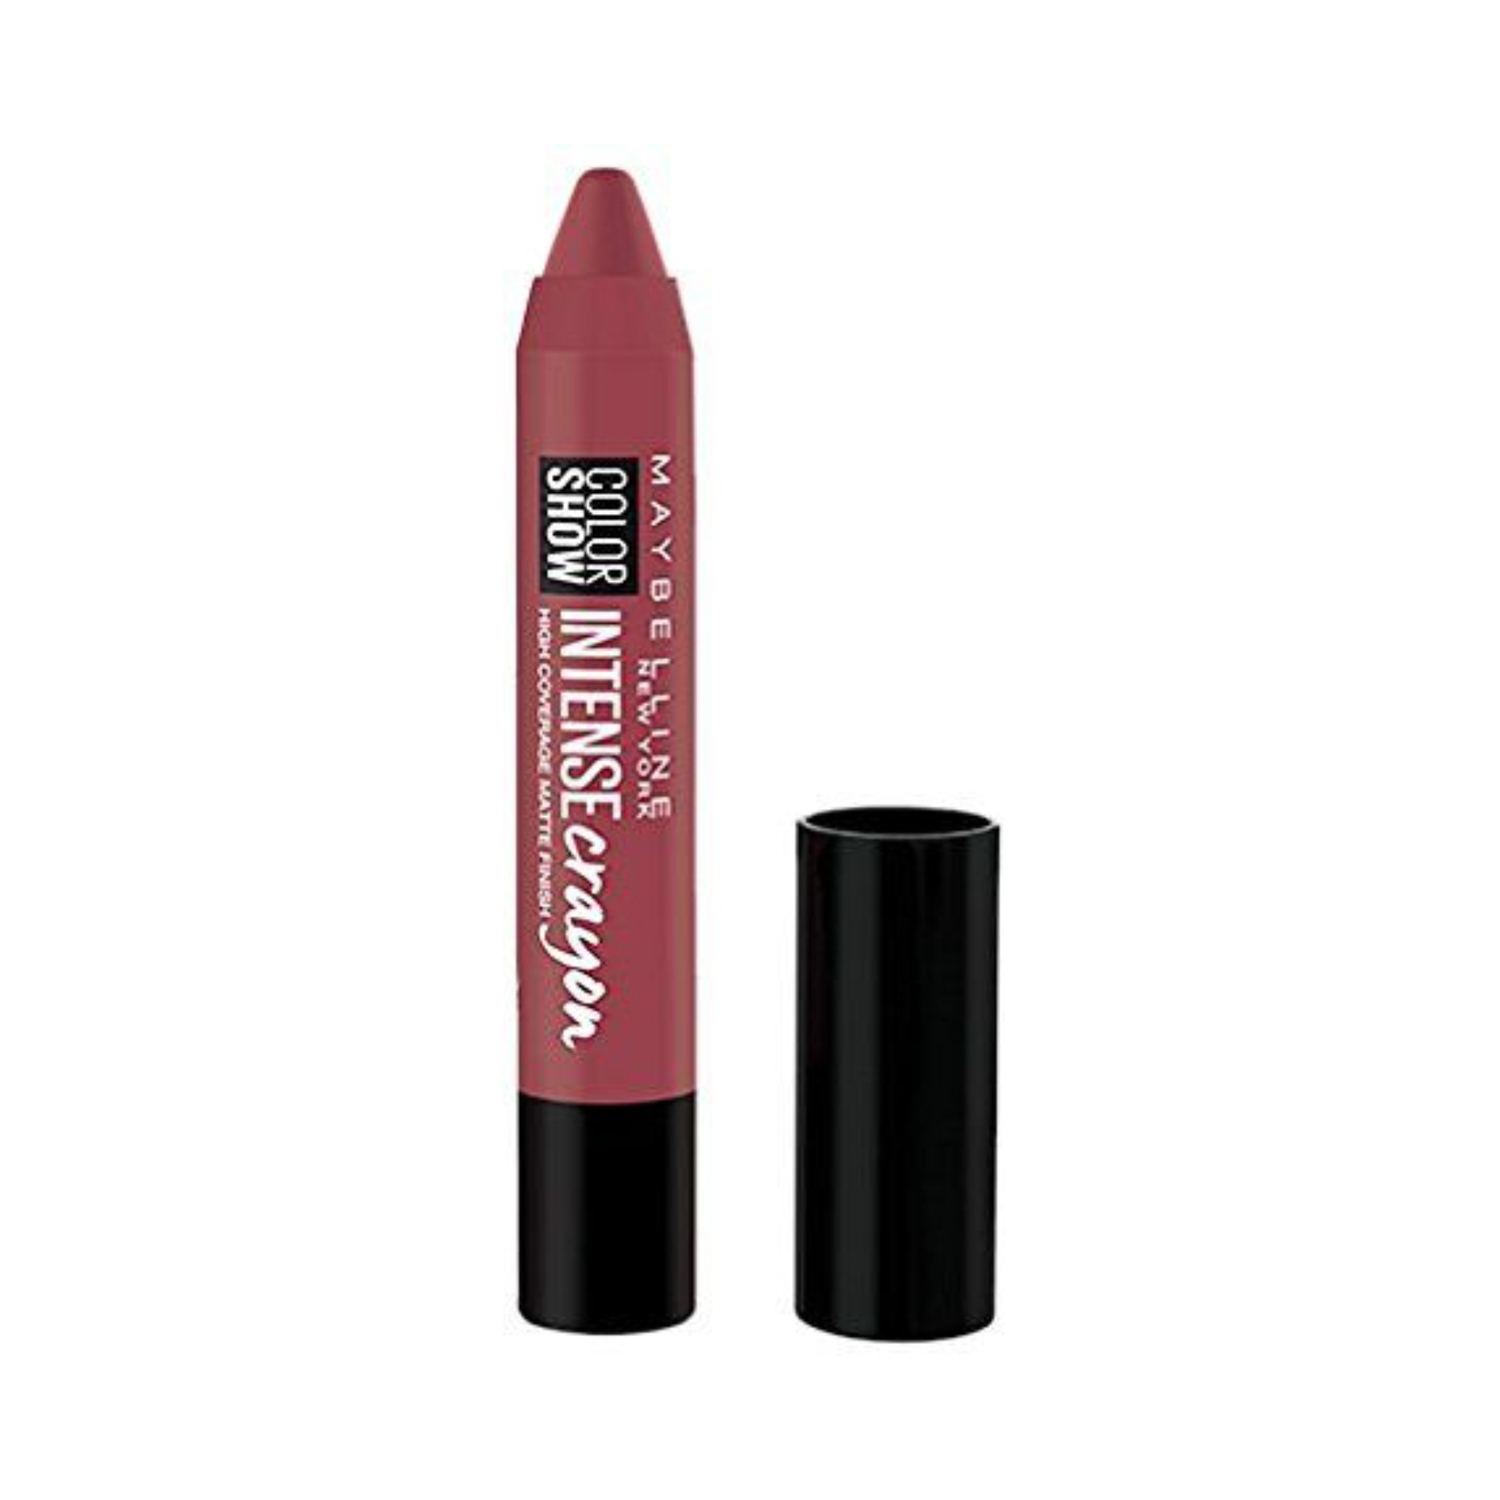 Maybelline New York Color Show Intense Lip Crayon SPF 17 - Mystic Mauve (3.5g)